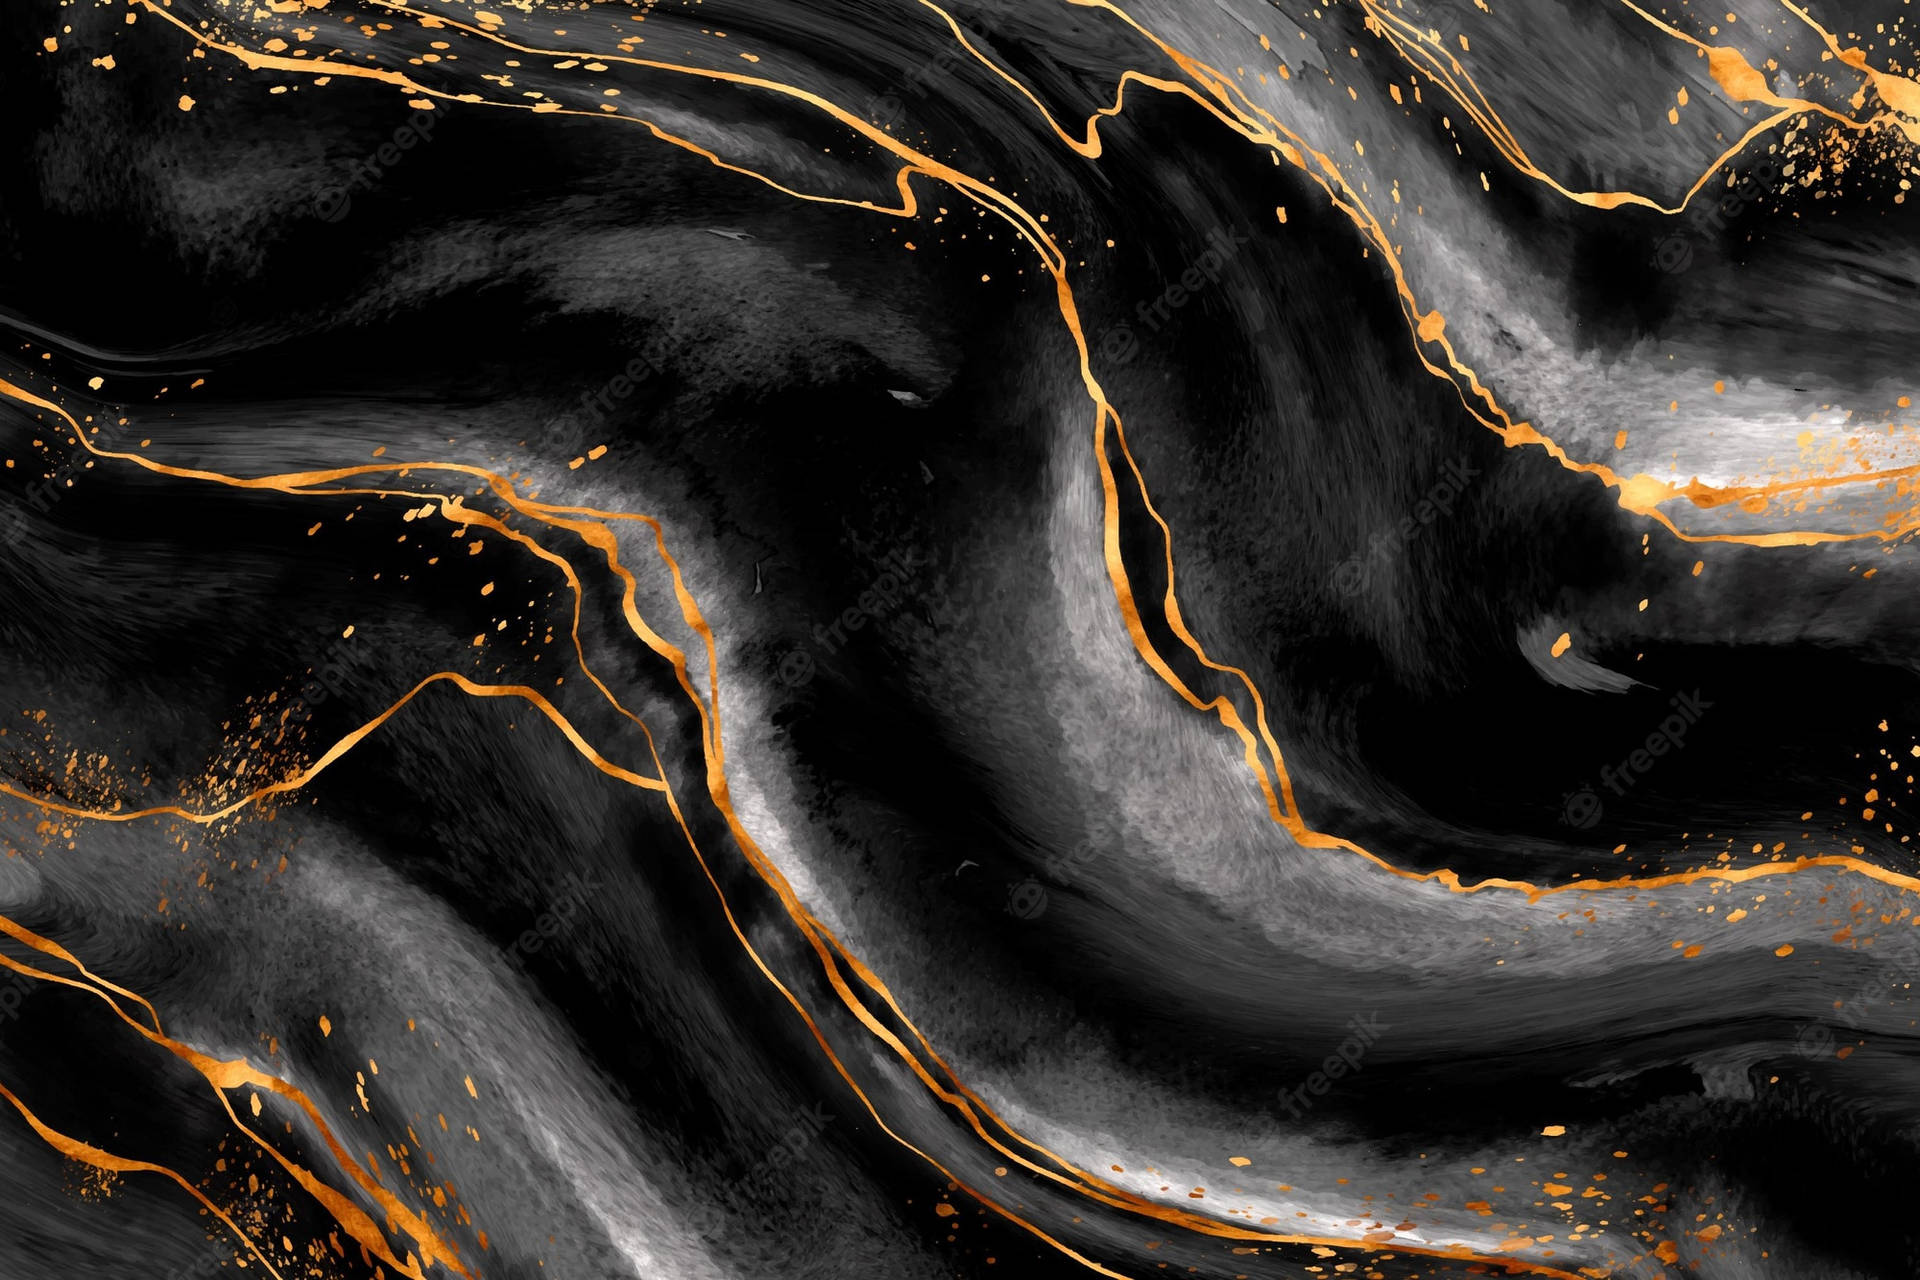 "See a Dreamy Scene of Black Marble 4K" Wallpaper